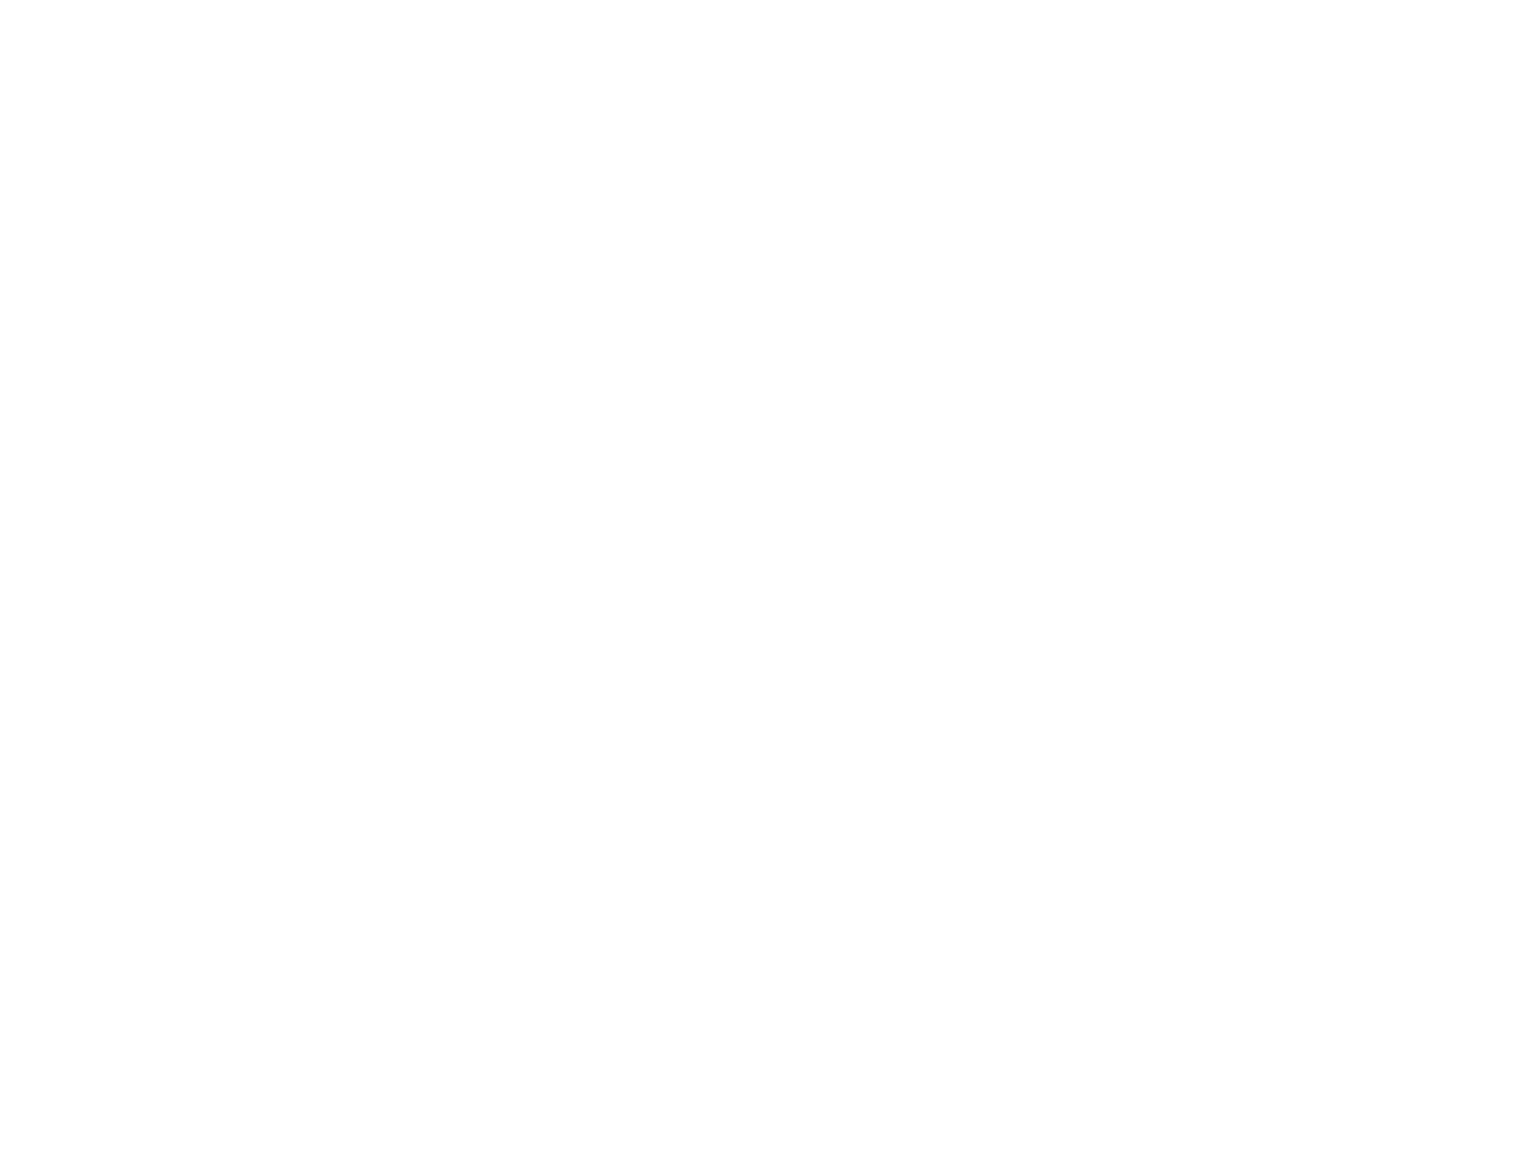 Andritz logo for dark backgrounds (transparent PNG)